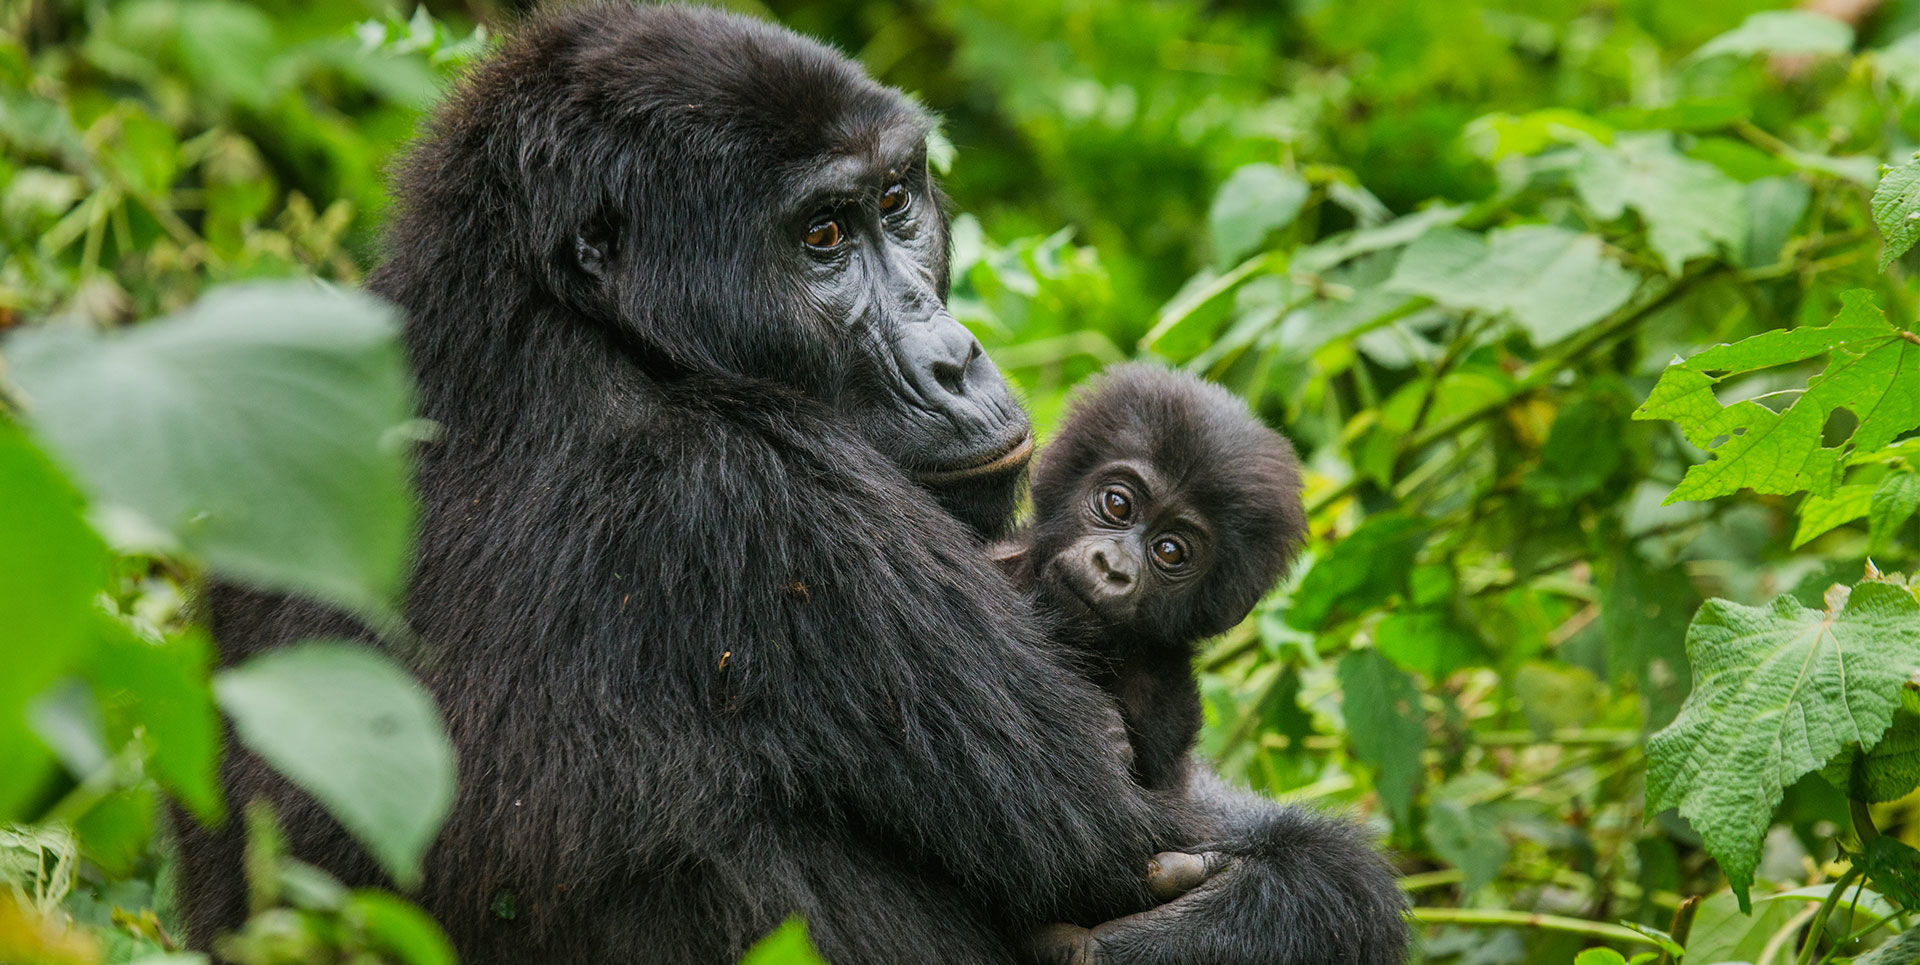 gorilla tours from kigali